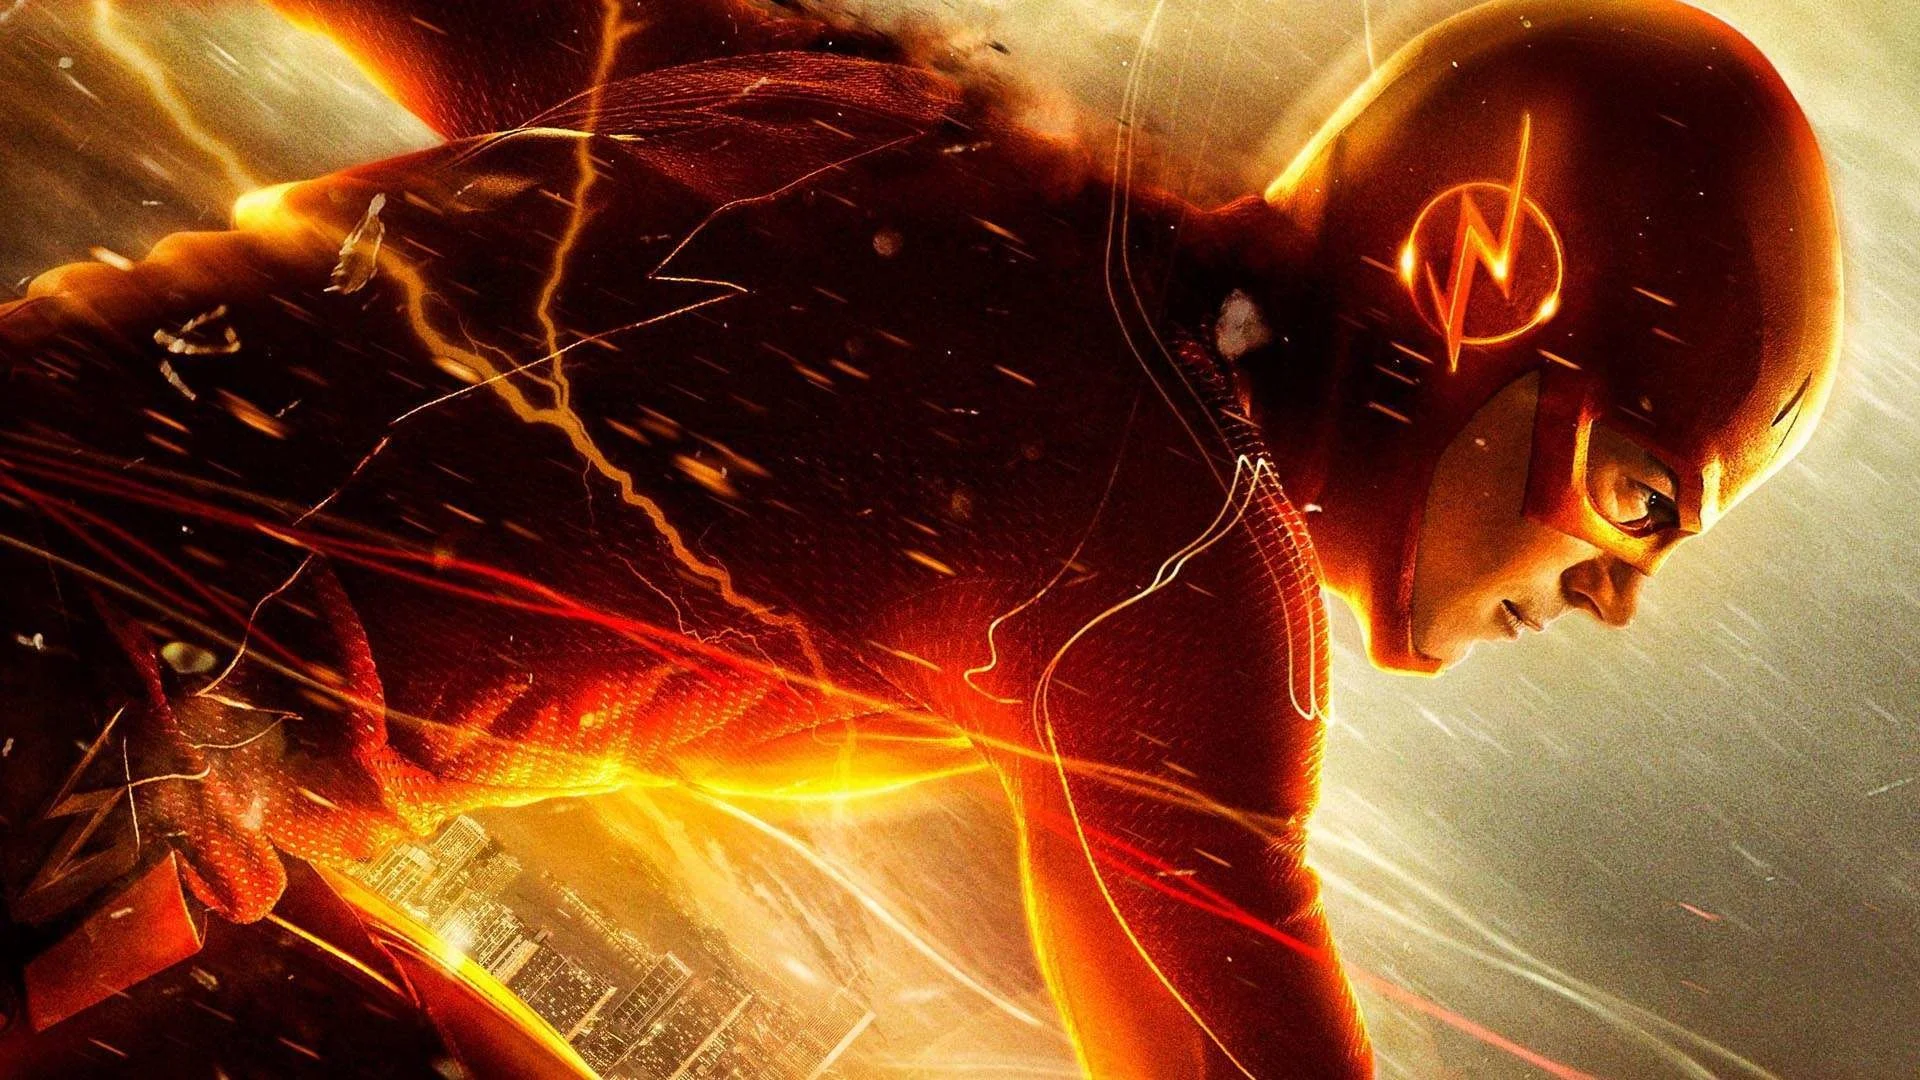 Barry Allen as The Flash Wallpaper free desktop backgrounds